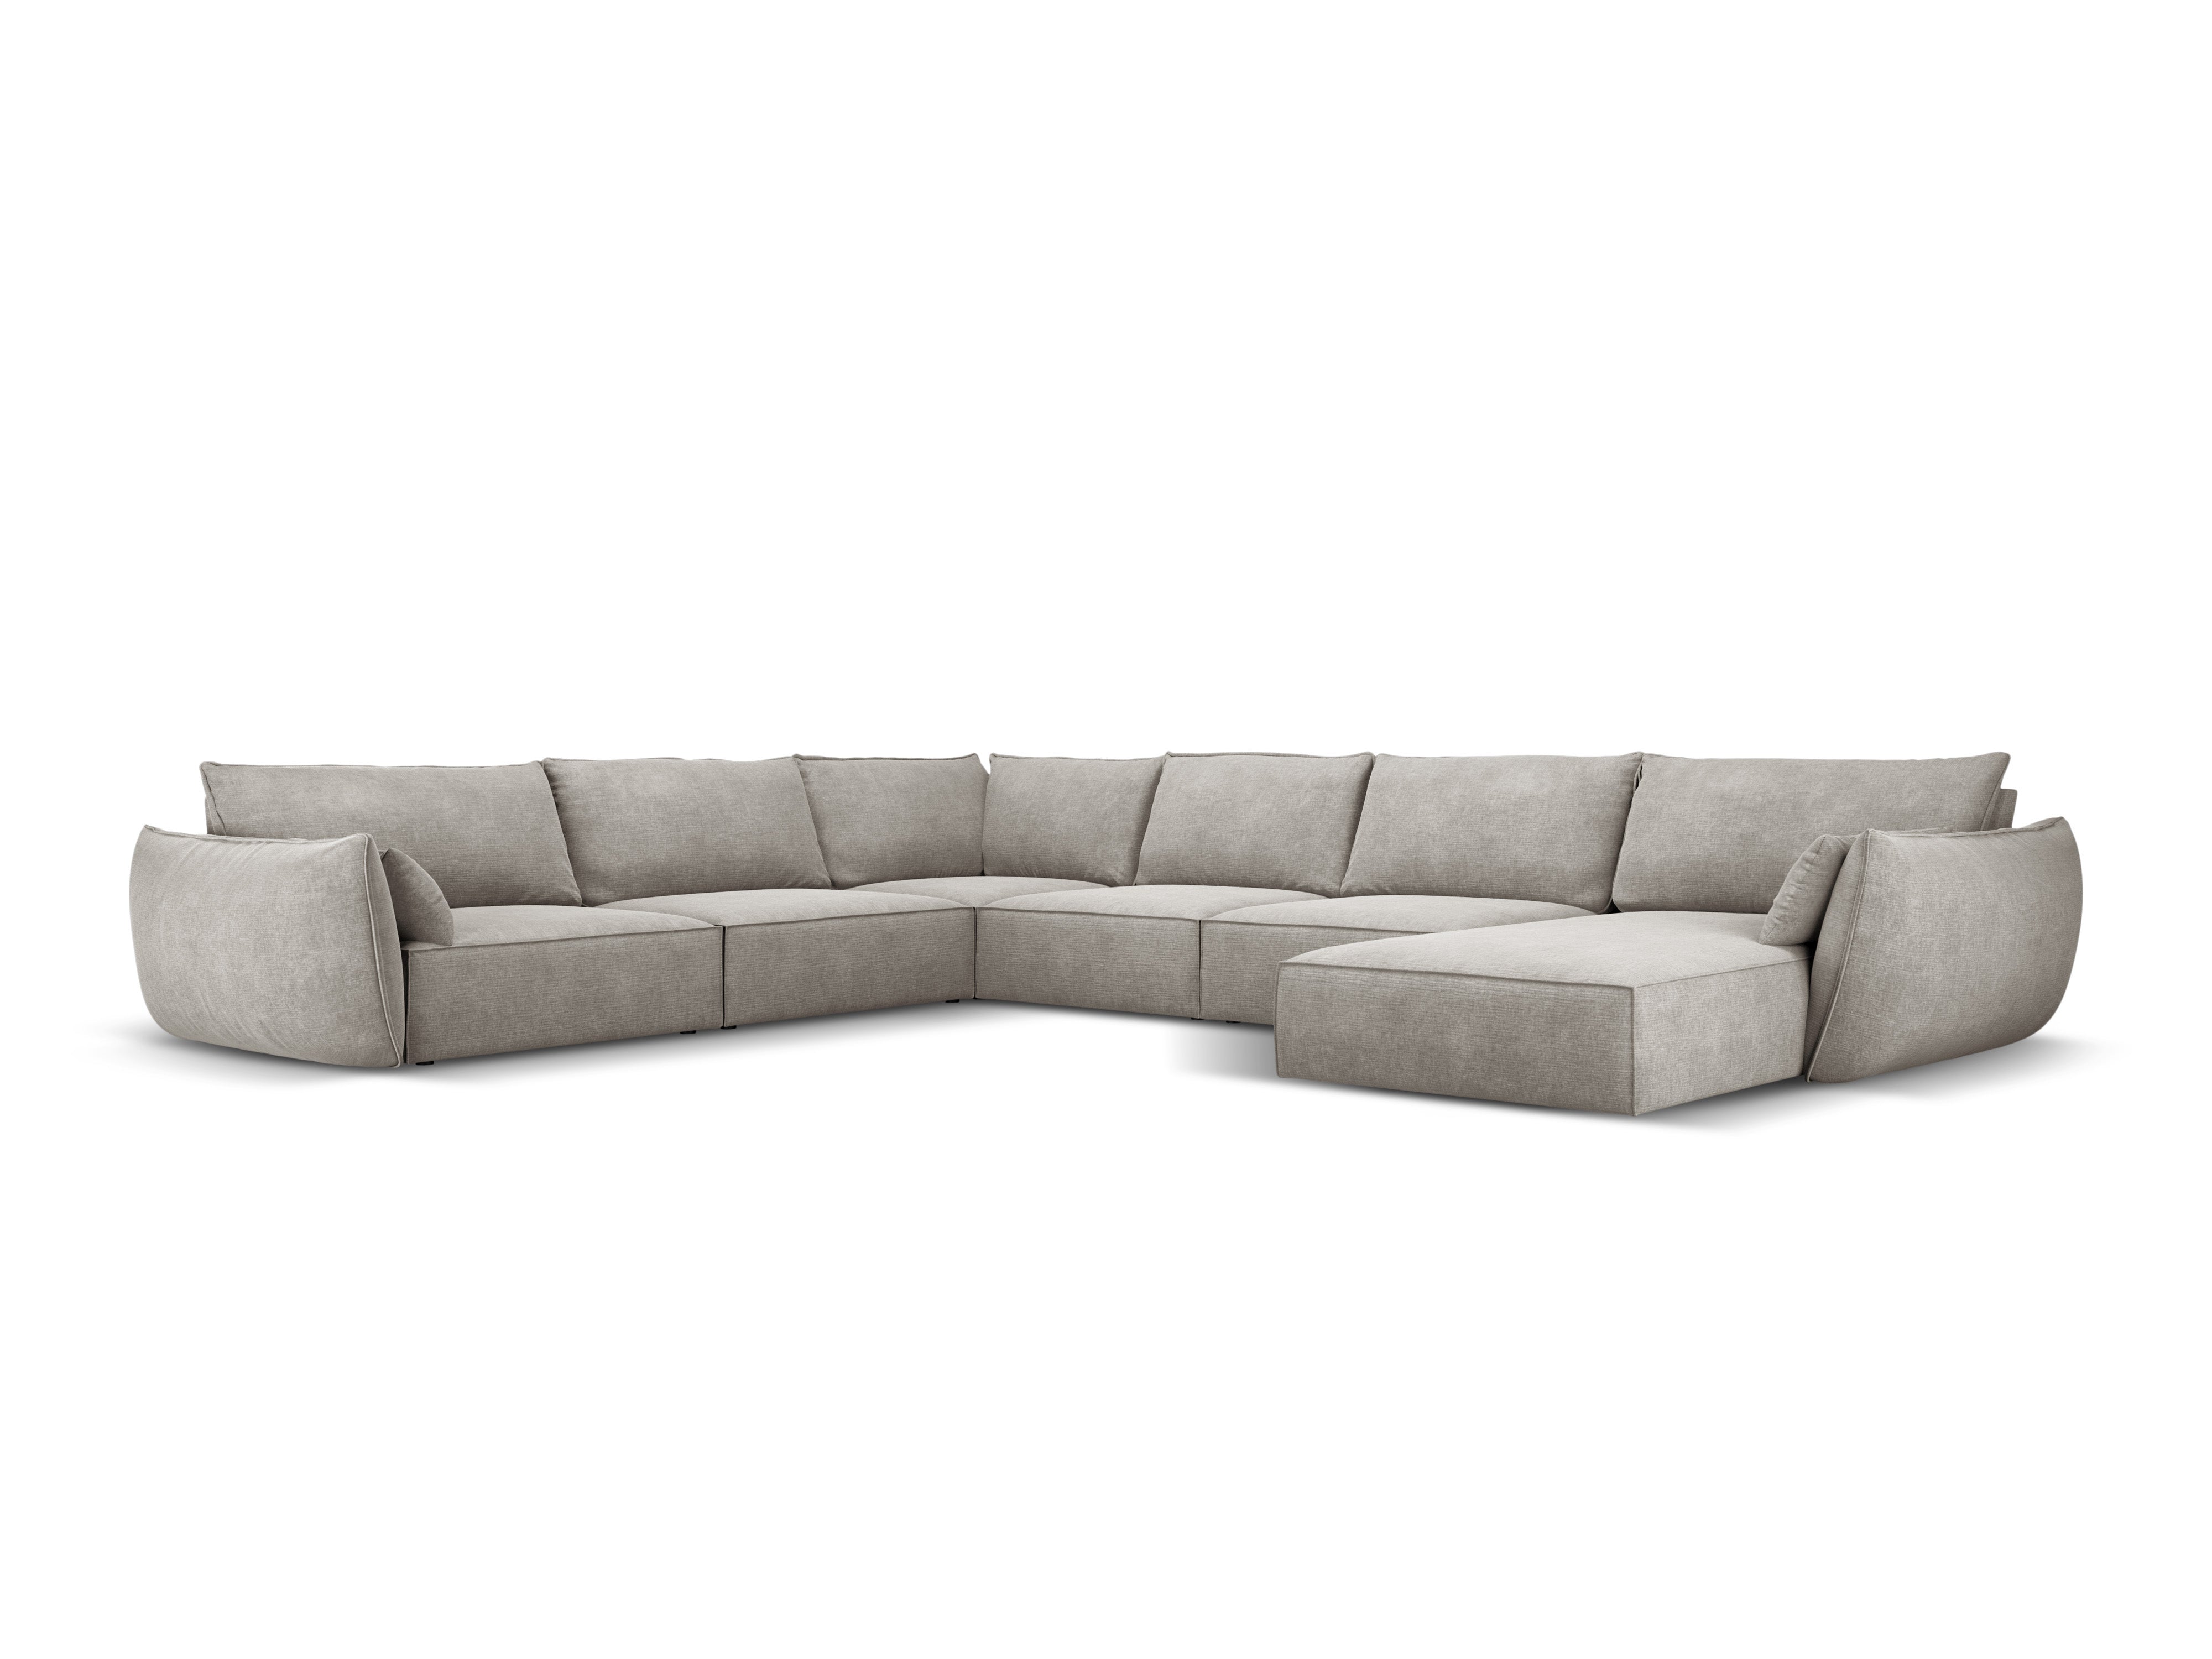 Panoramic Left Corner Sofa, "Vanda", 8 Seats, 384x284x85
Made in Europe, Mazzini Sofas, Eye on Design